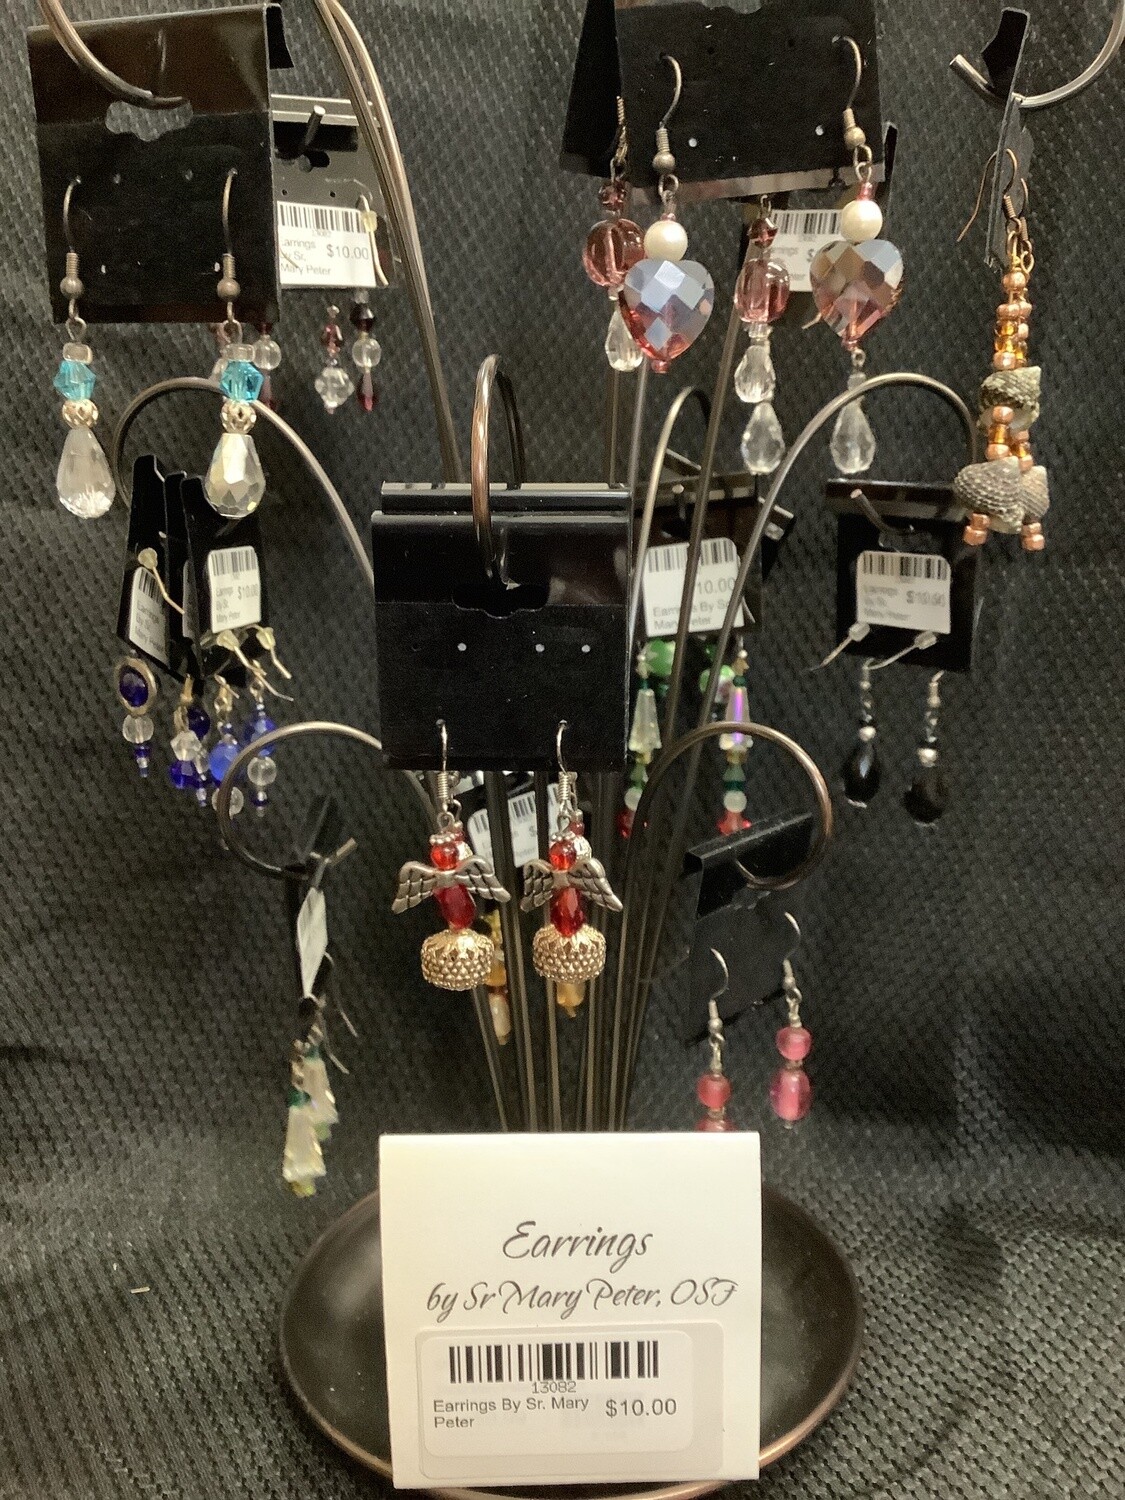 Earrings By Sr. Mary Peter